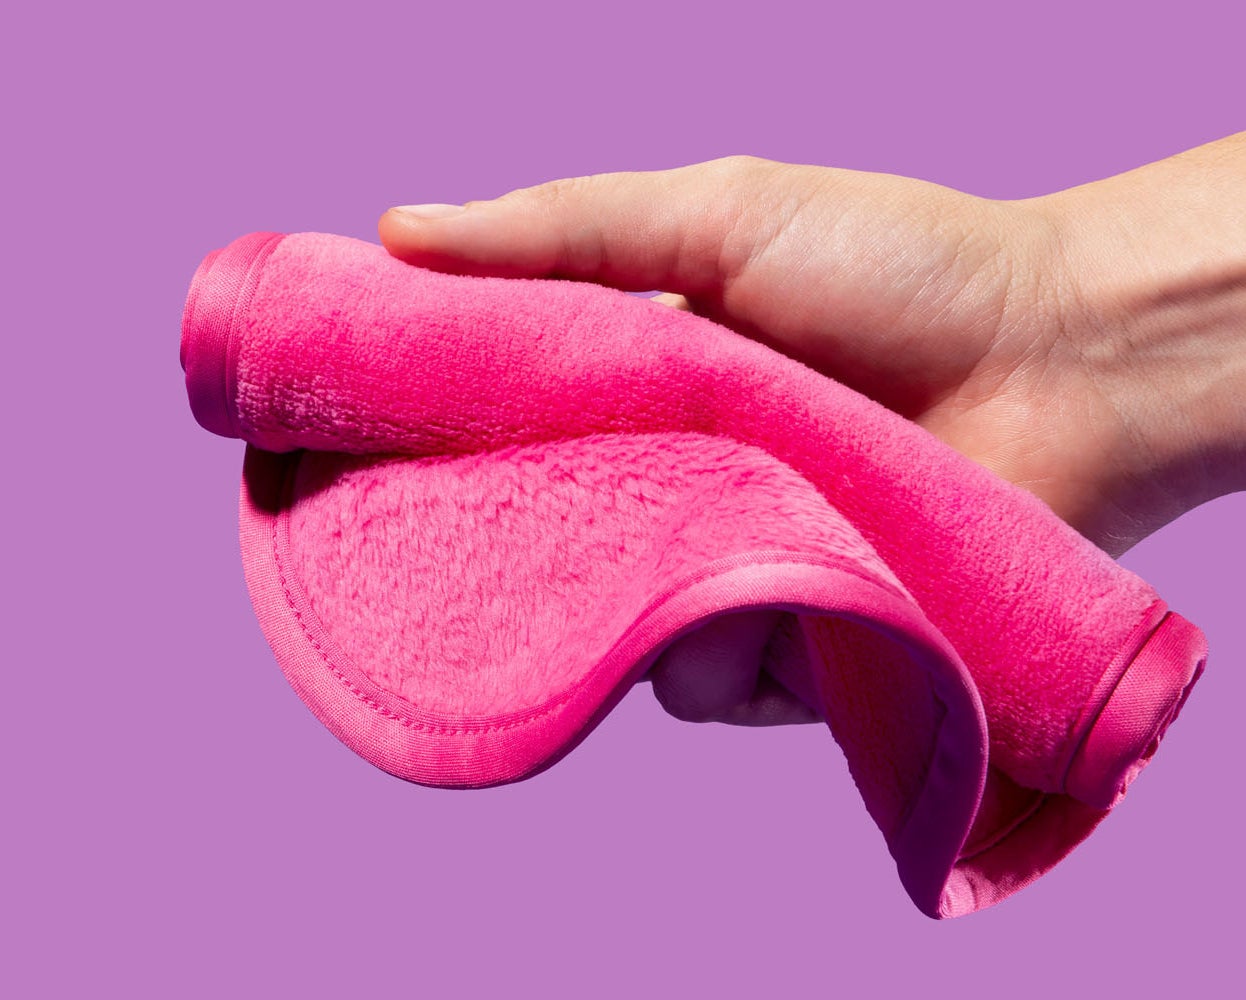 a hand holding the pink makeup erasing cloth